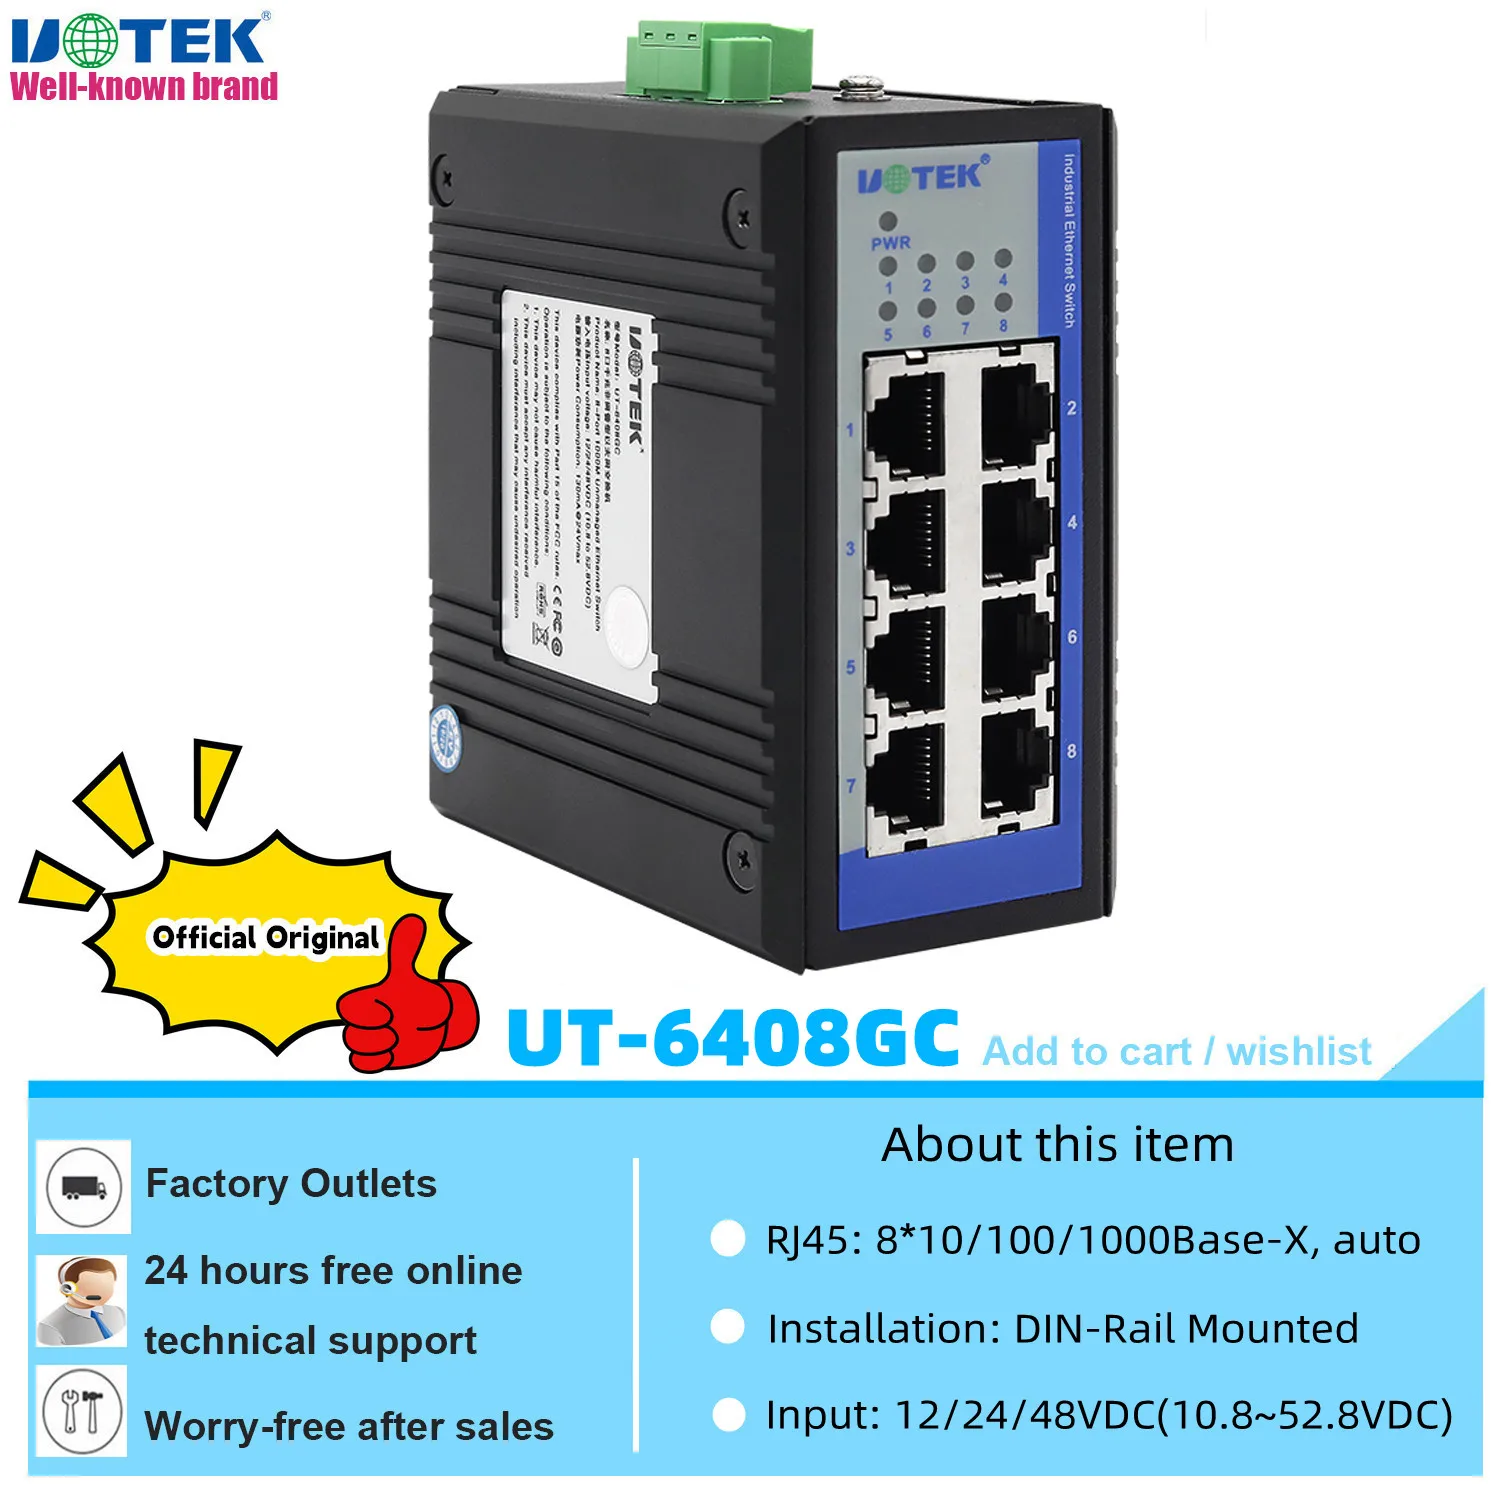 

UOTEK 1000M Industrial Ethernet Switch Gigabit 8 Port RJ45 Network Unmanaged DIN-Rail Full Half Duplex Plug and Play UT-6408GC